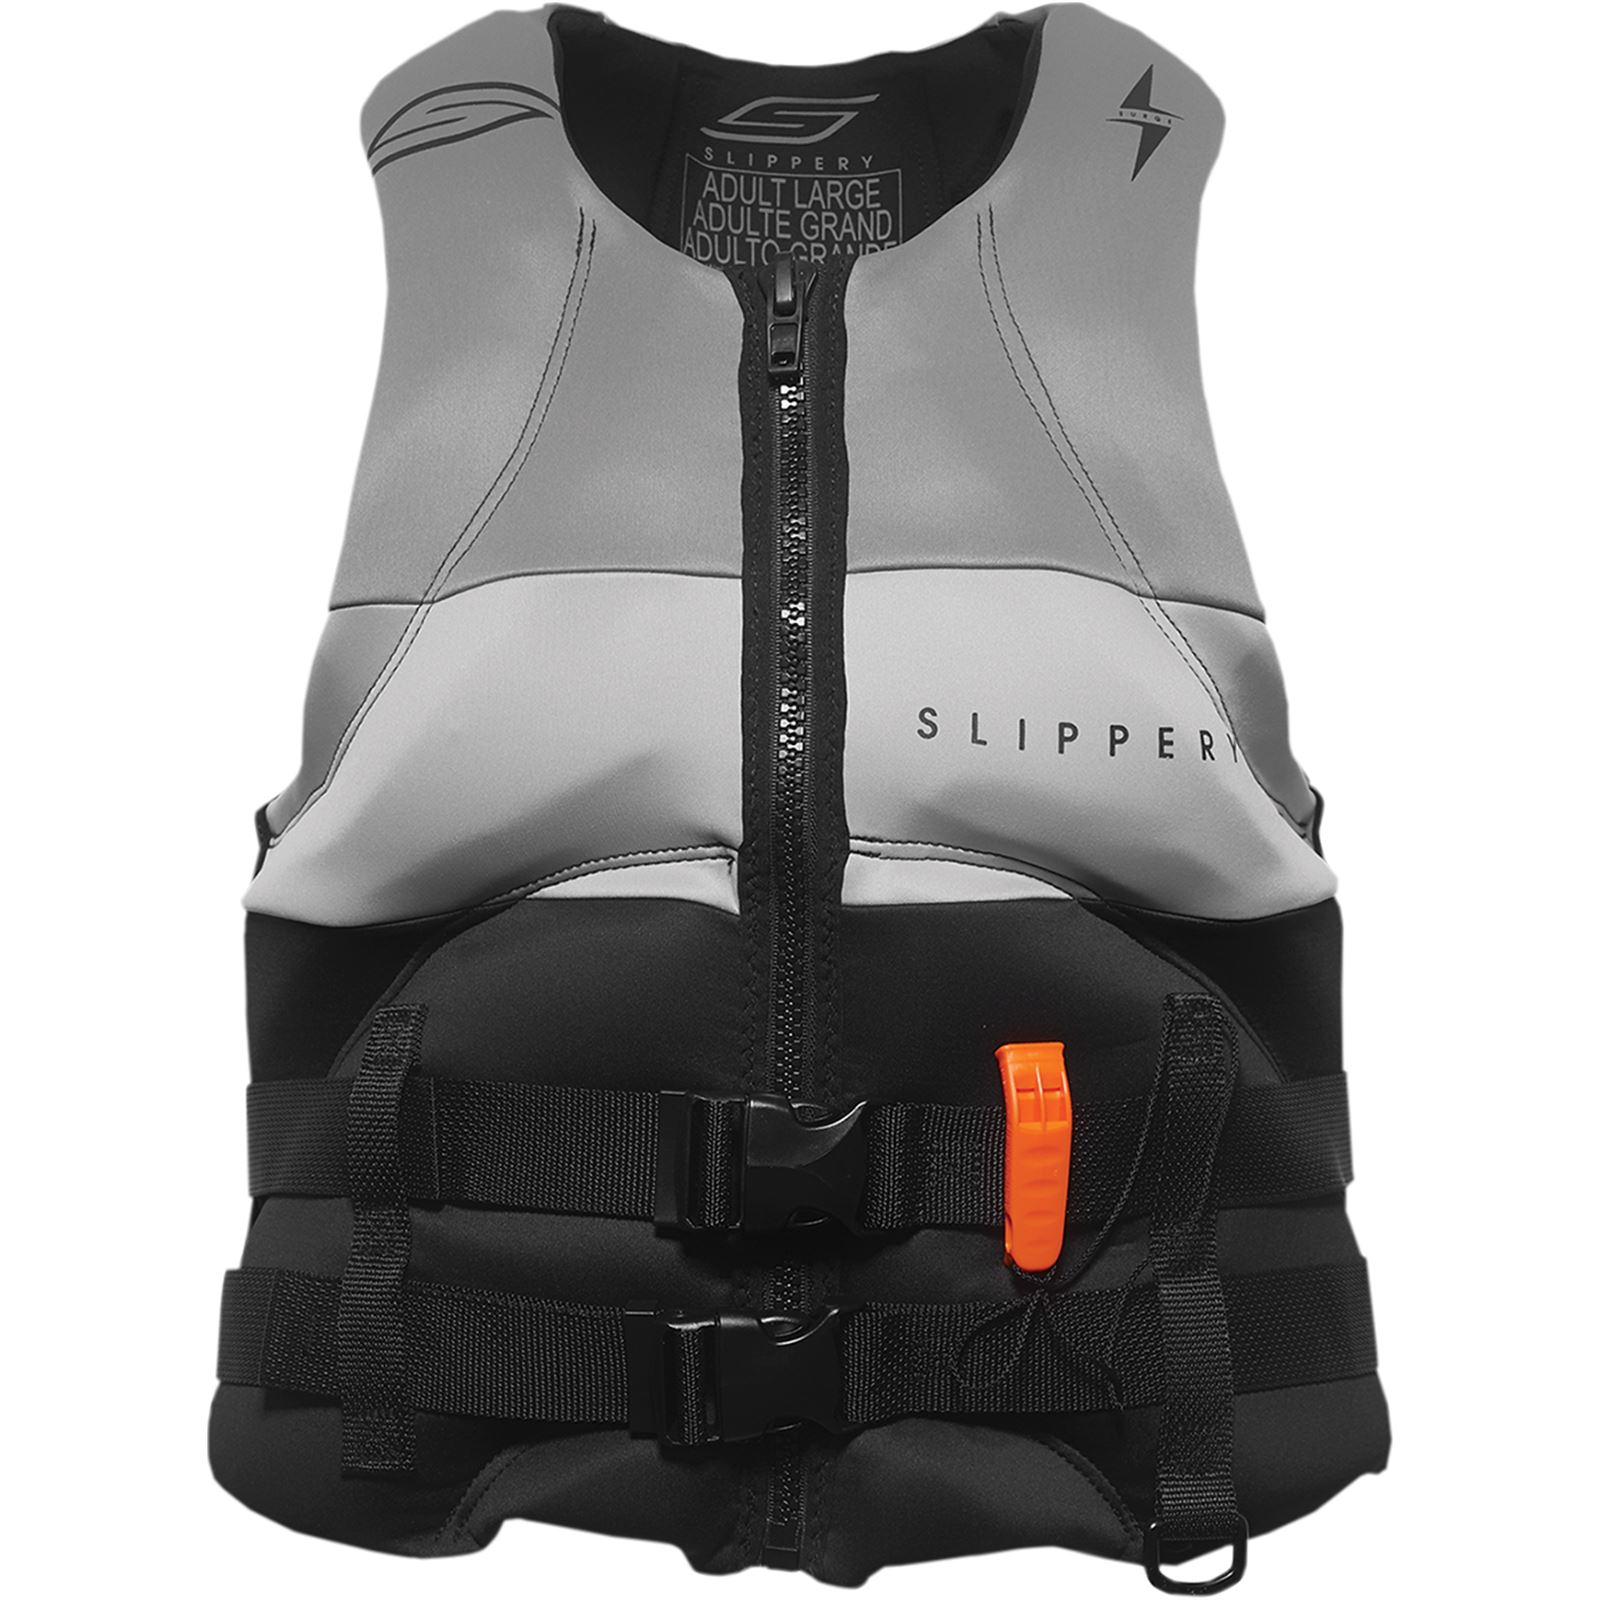 Slippery Surge Neo Life Vest - Black/Charcoal - Medium